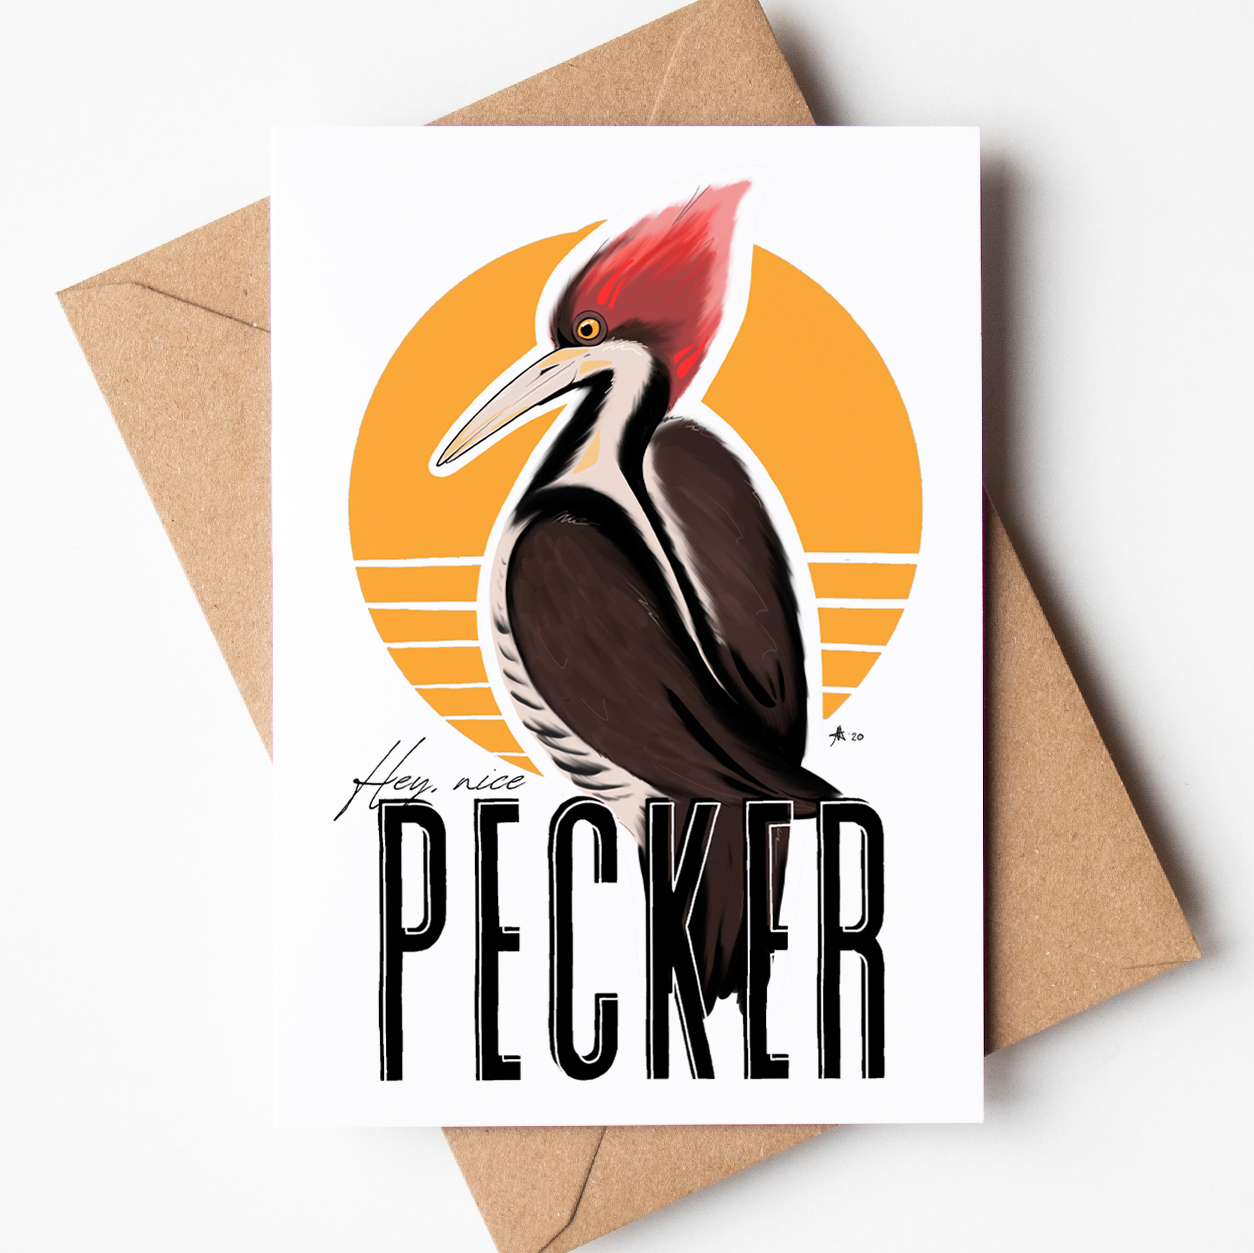 "Nice PECKER" - Greeting Card